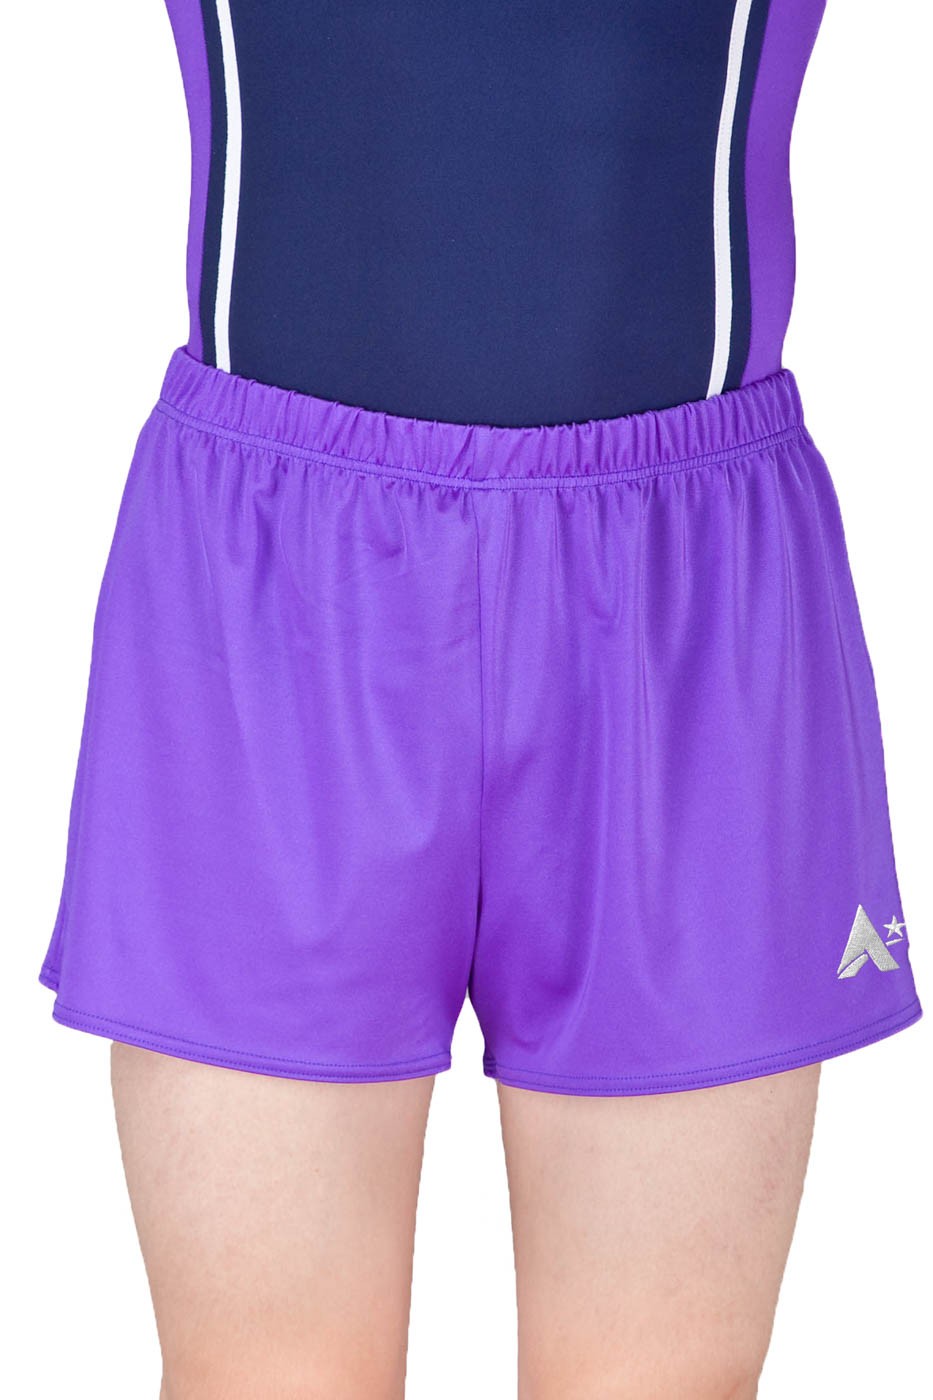 https://www.astar.uk.com/wp-content/uploads/2019/09/PBC-J00-PBC-J07-Purple-lycra-gym-shorts-boys.jpg